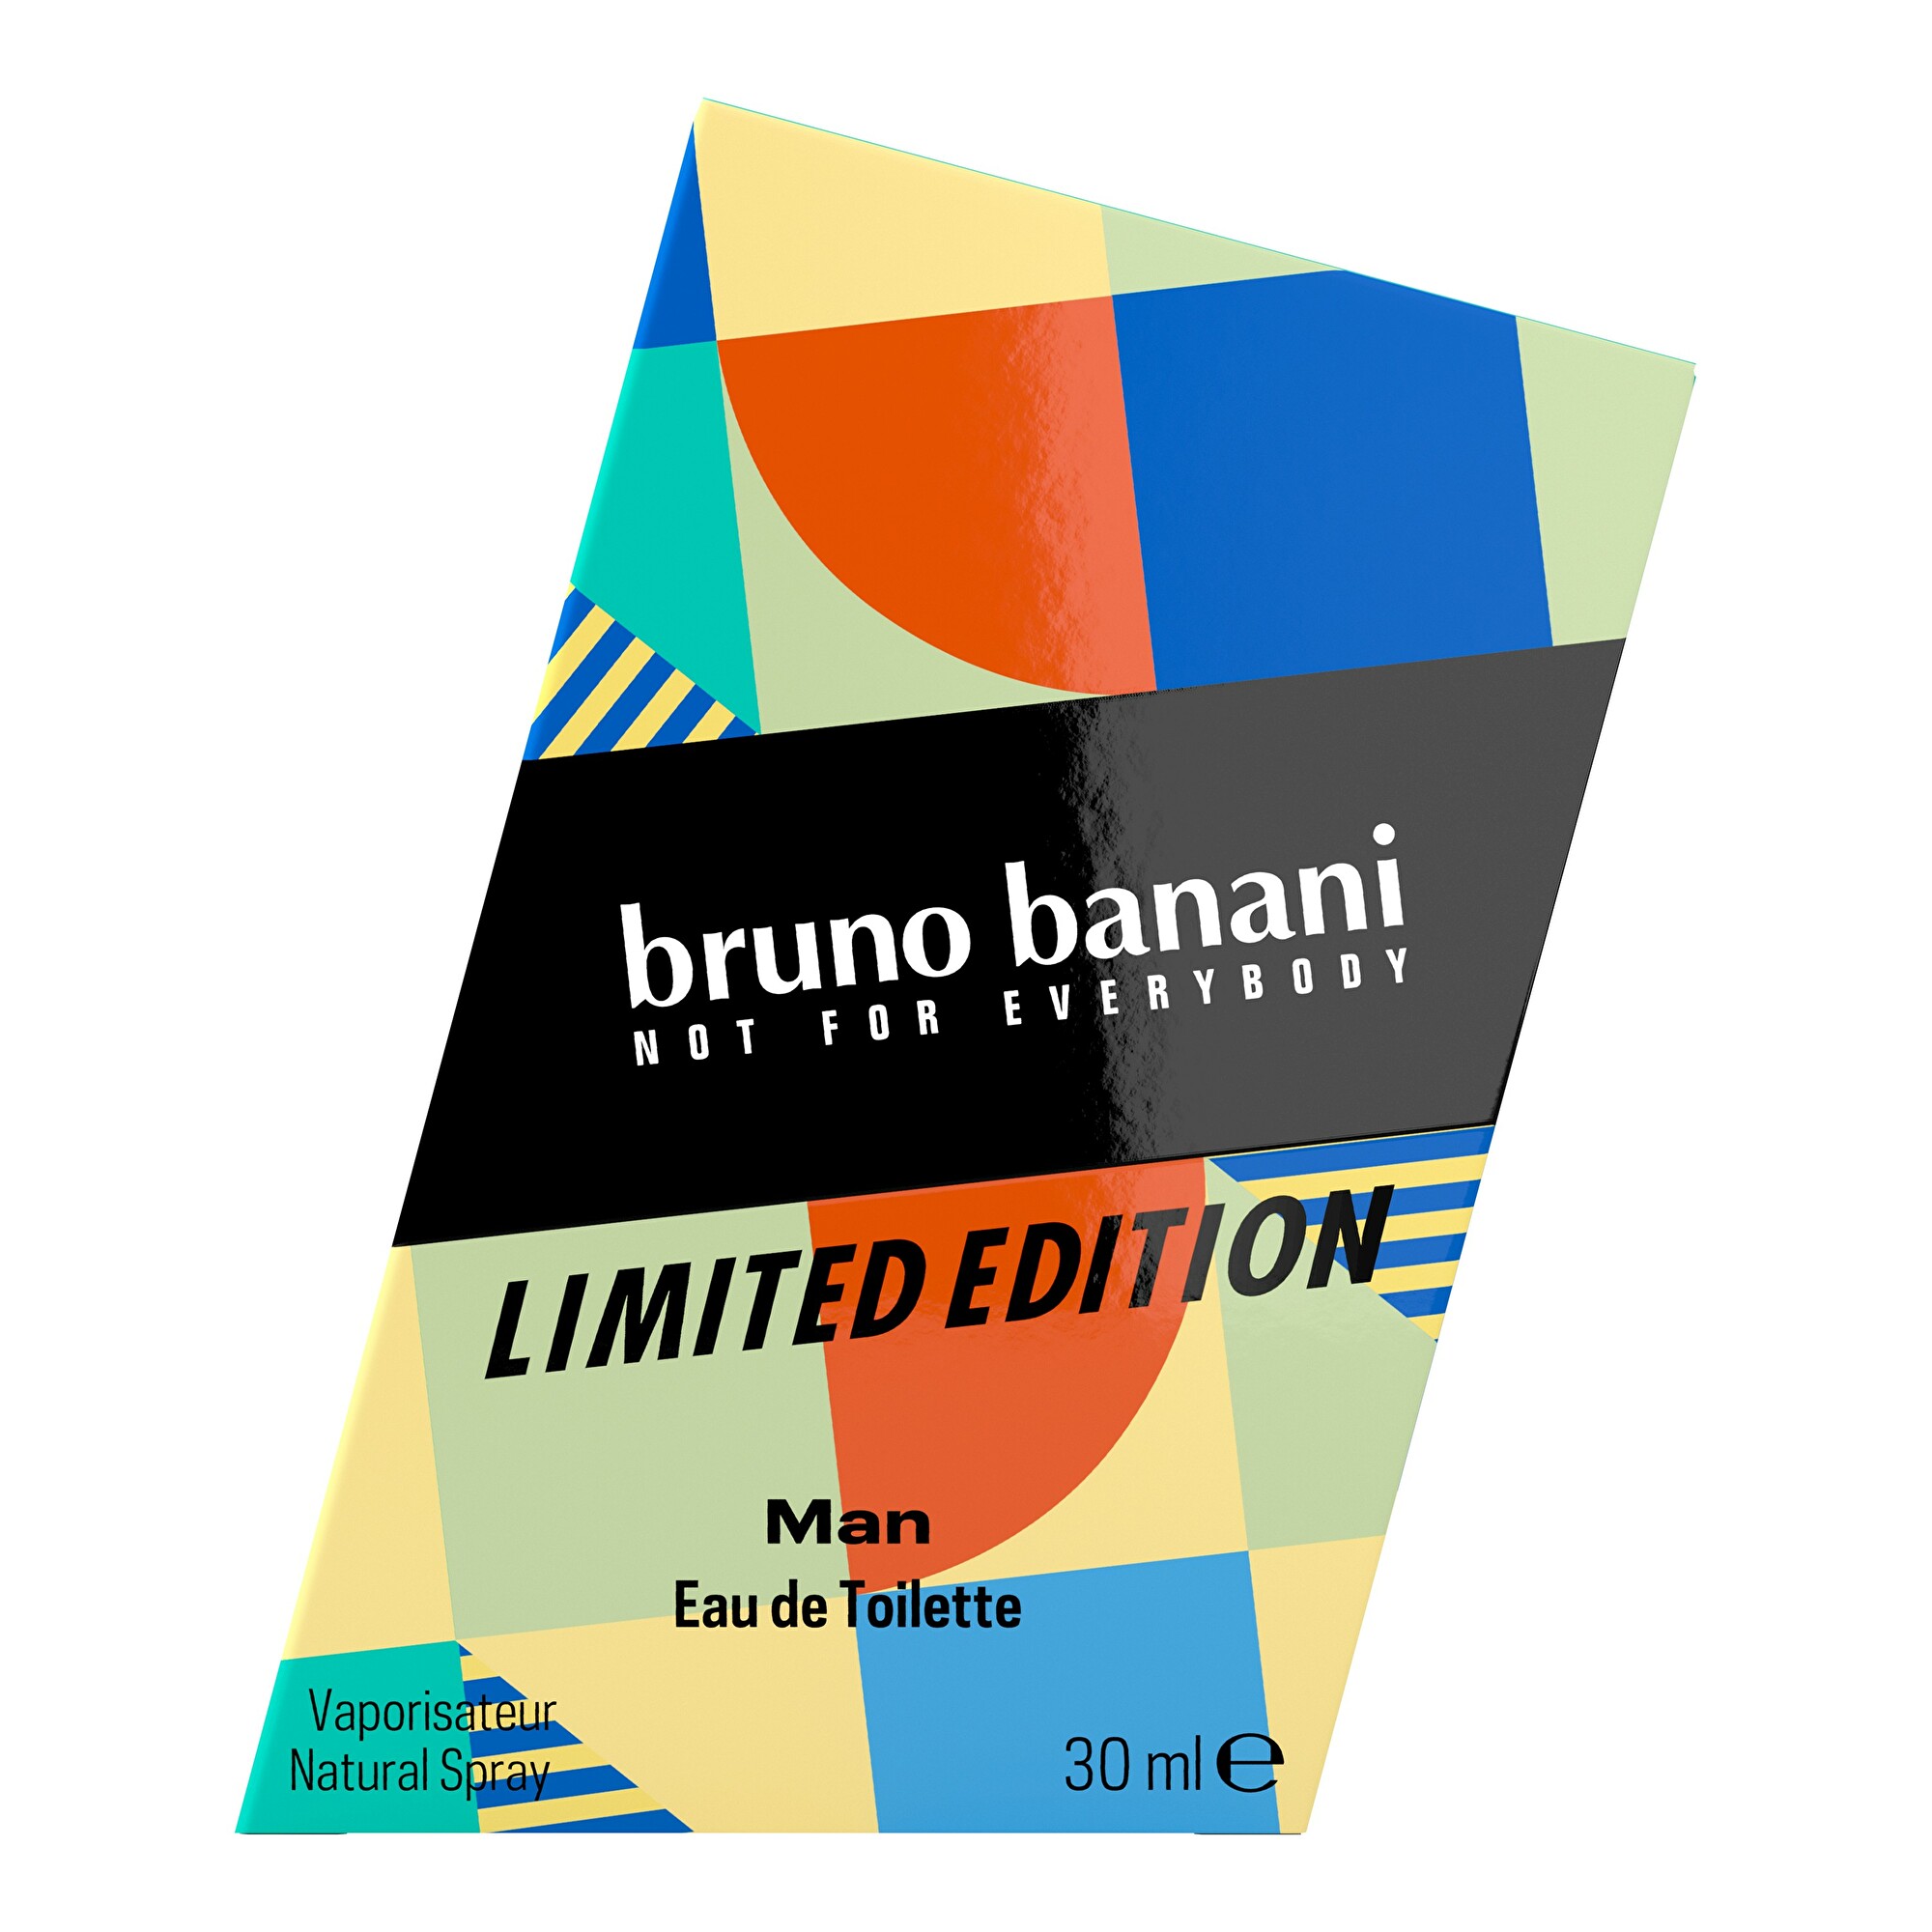 Bruno Banani Bruno Banani Retro Man Limited Edition - EDT 30 ml